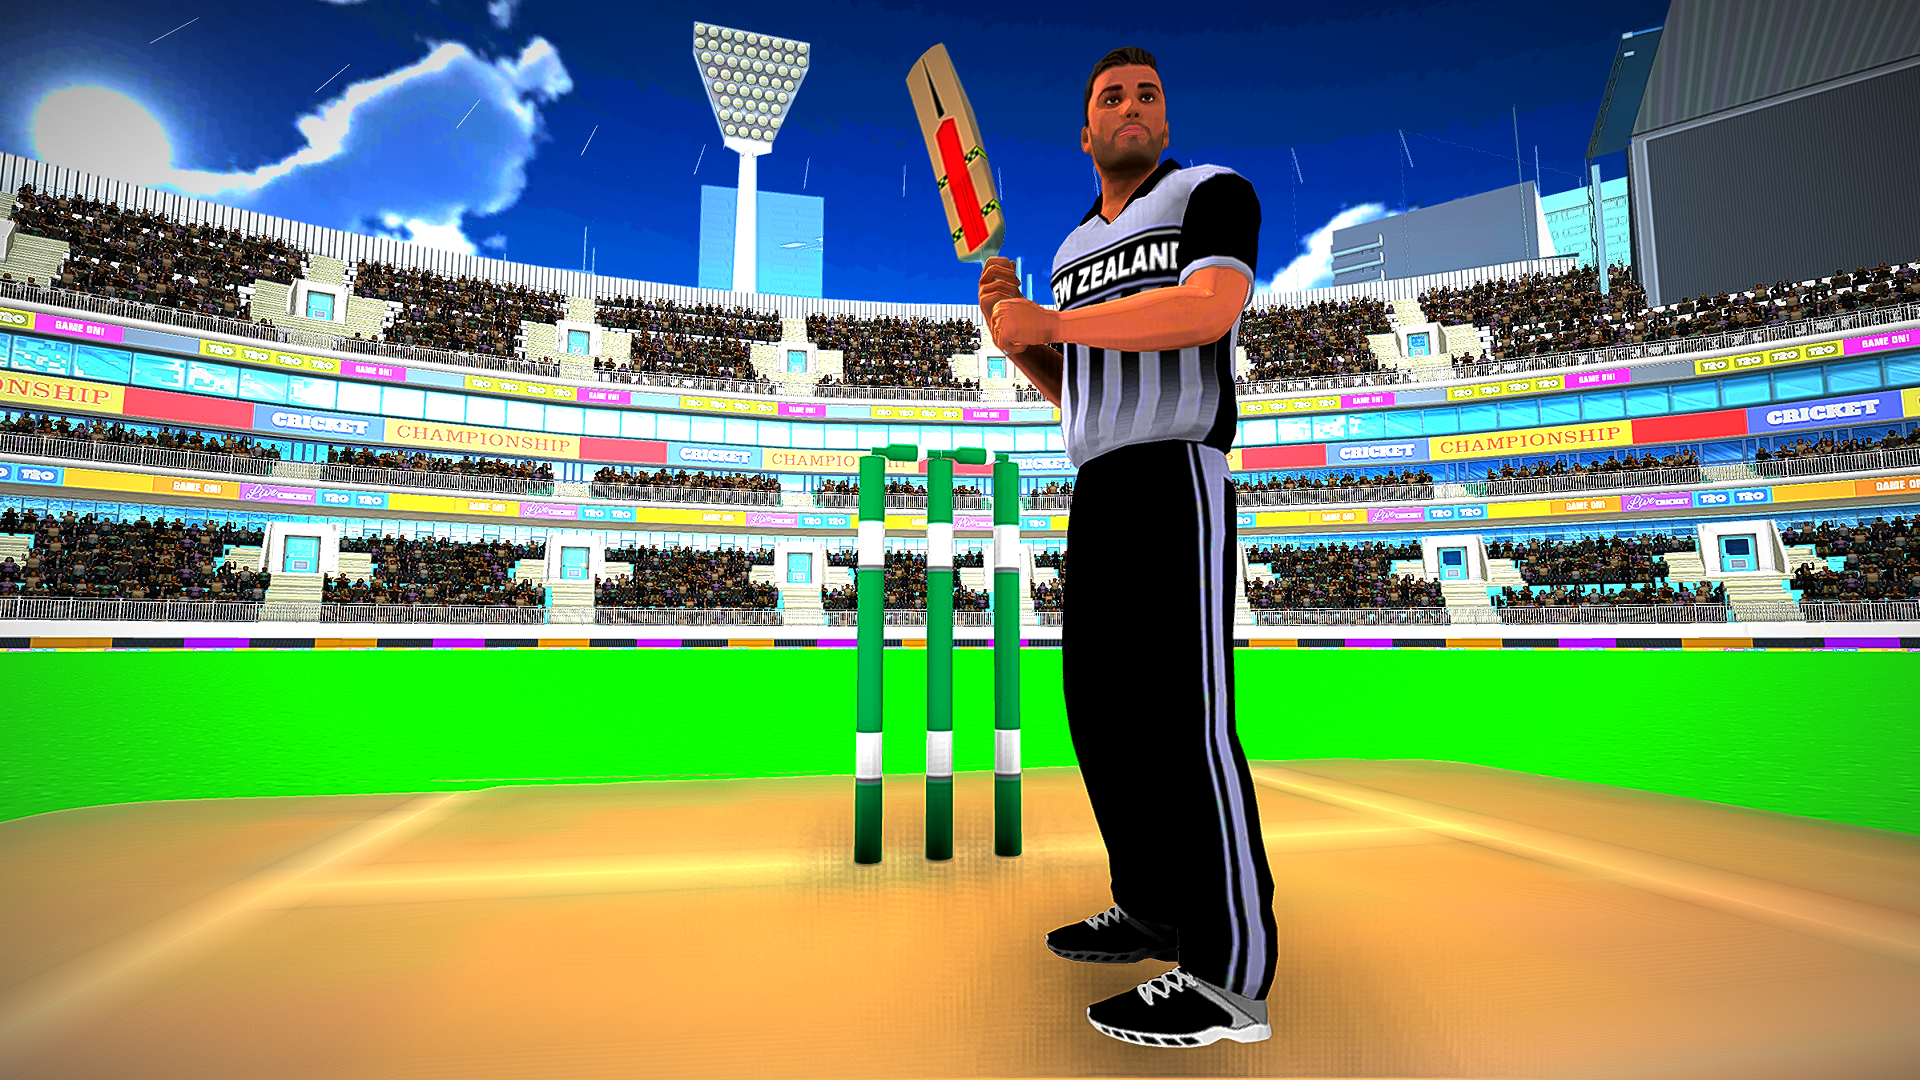 Screenshot 1 of World Cup T20 Cricket Games 2